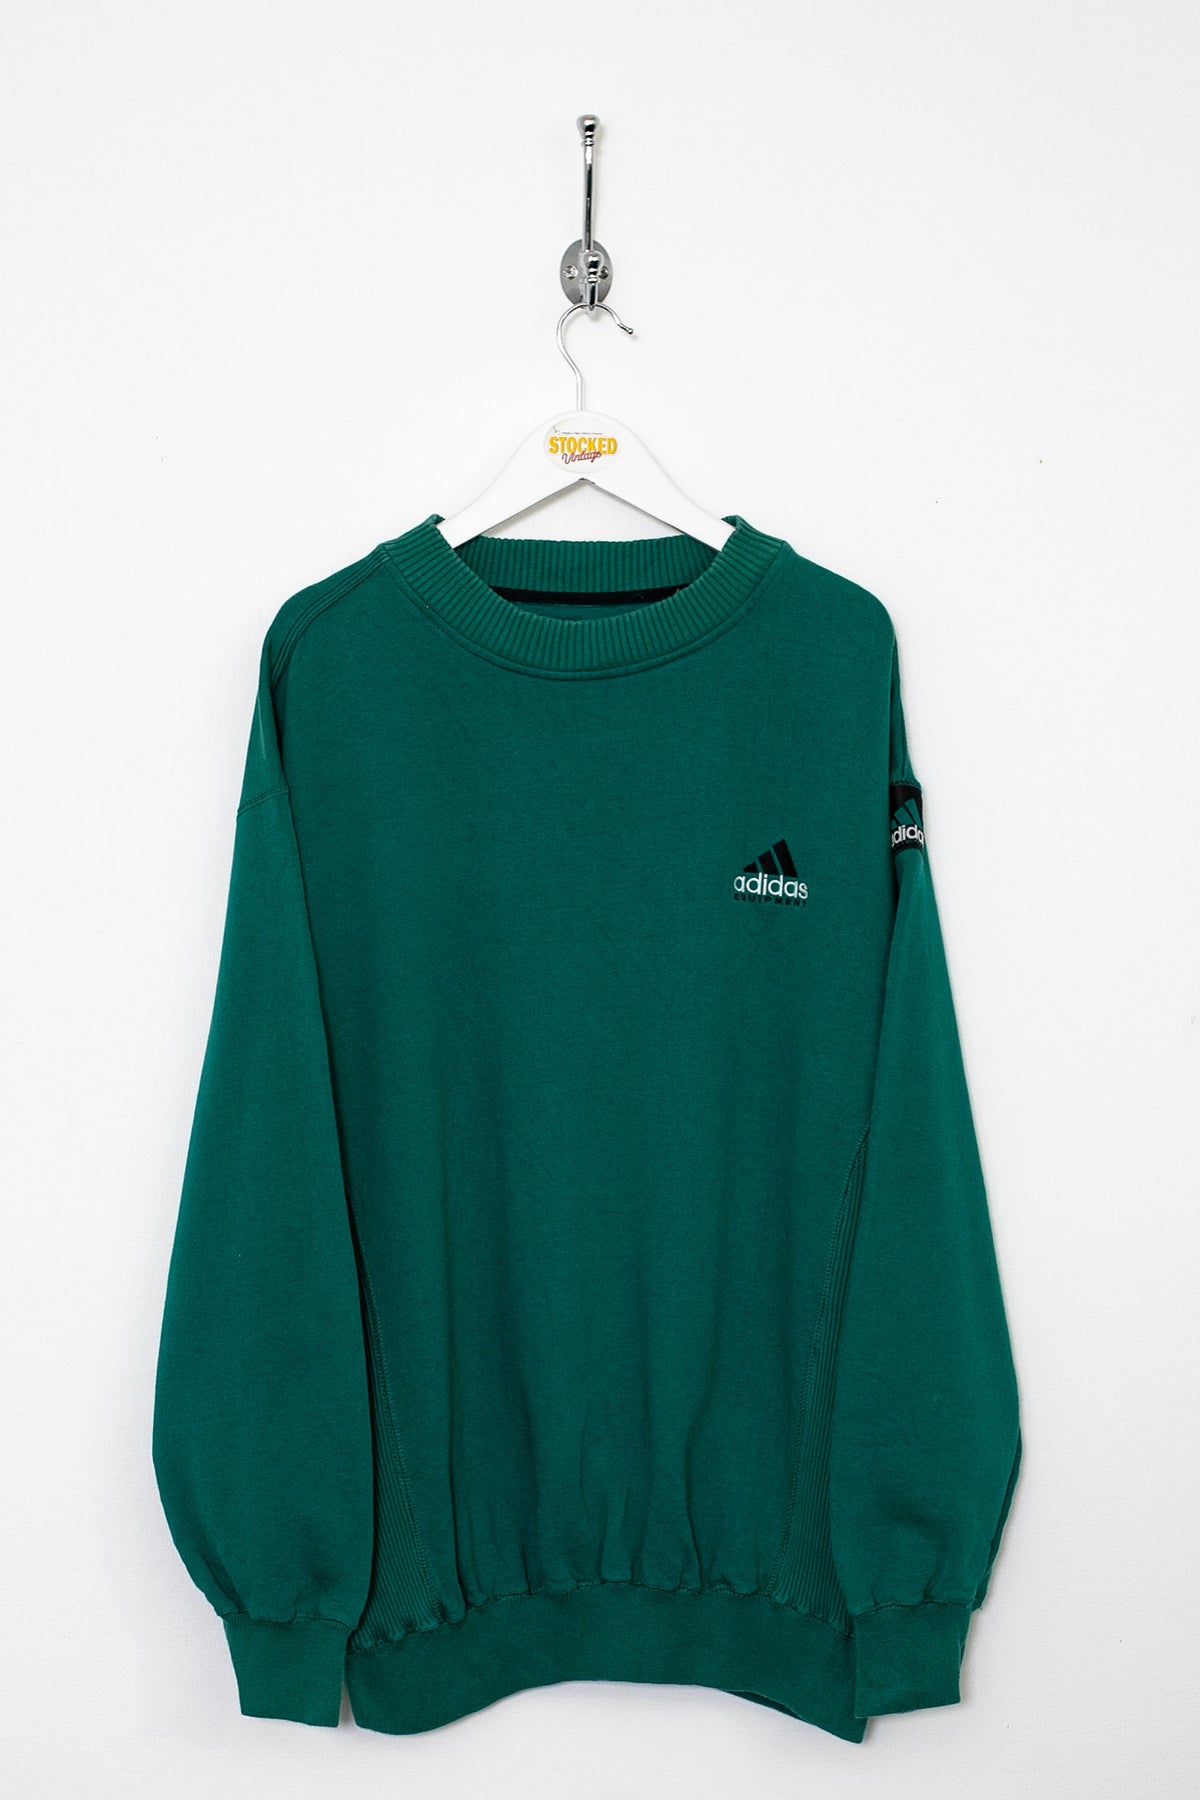 90s Adidas Equipment Sweatshirt (XL)